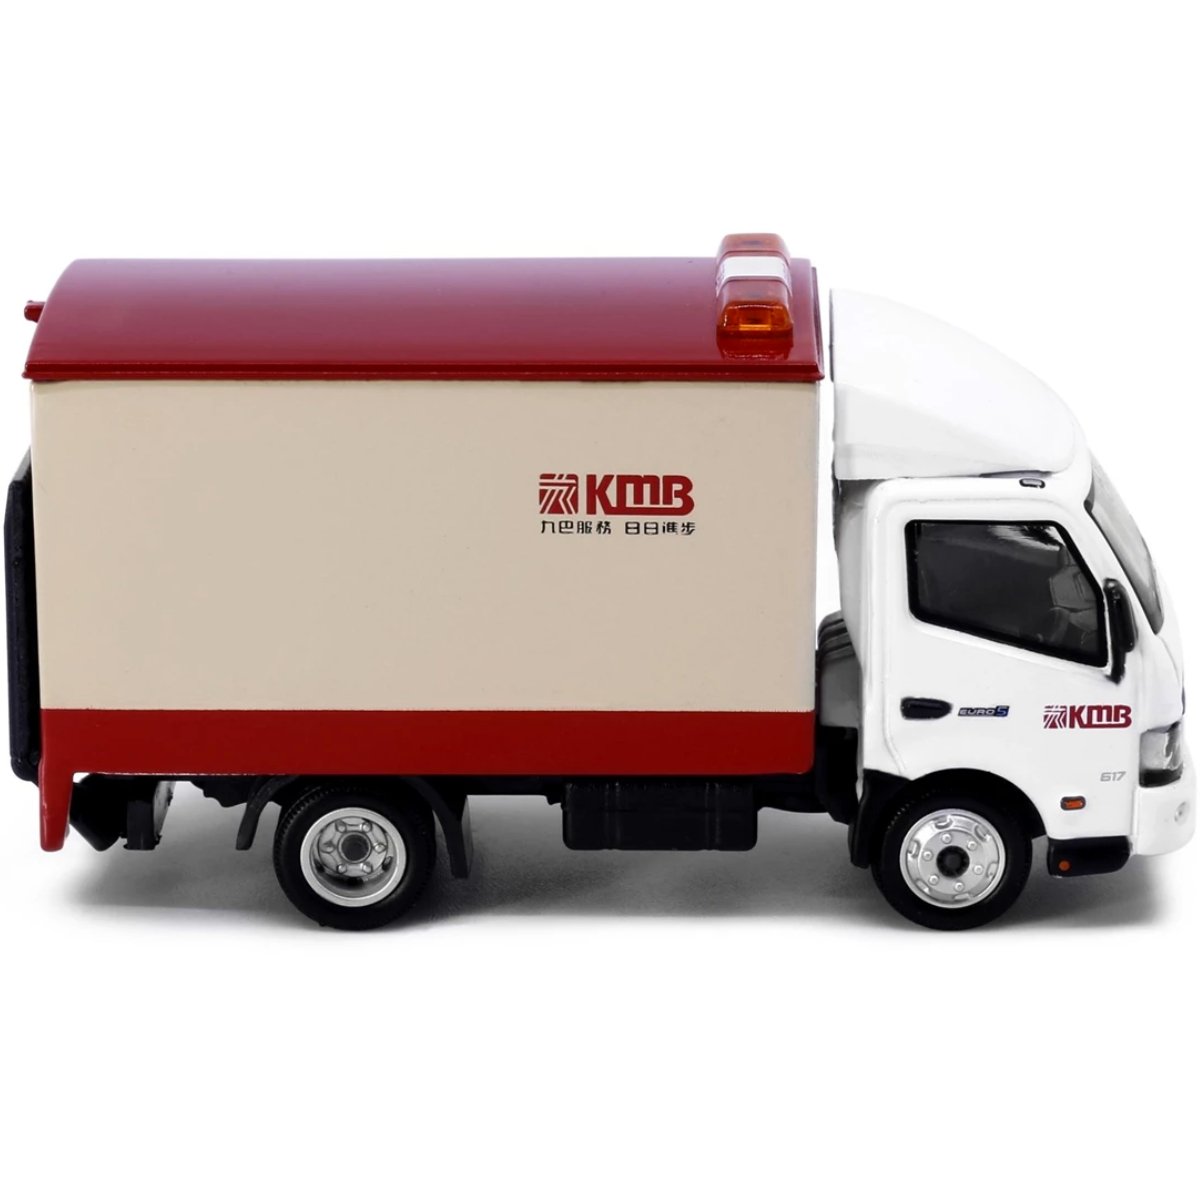 Tiny Models Hino 300 KMB Box Lorry (1:76 Scale) - Phillips Hobbies